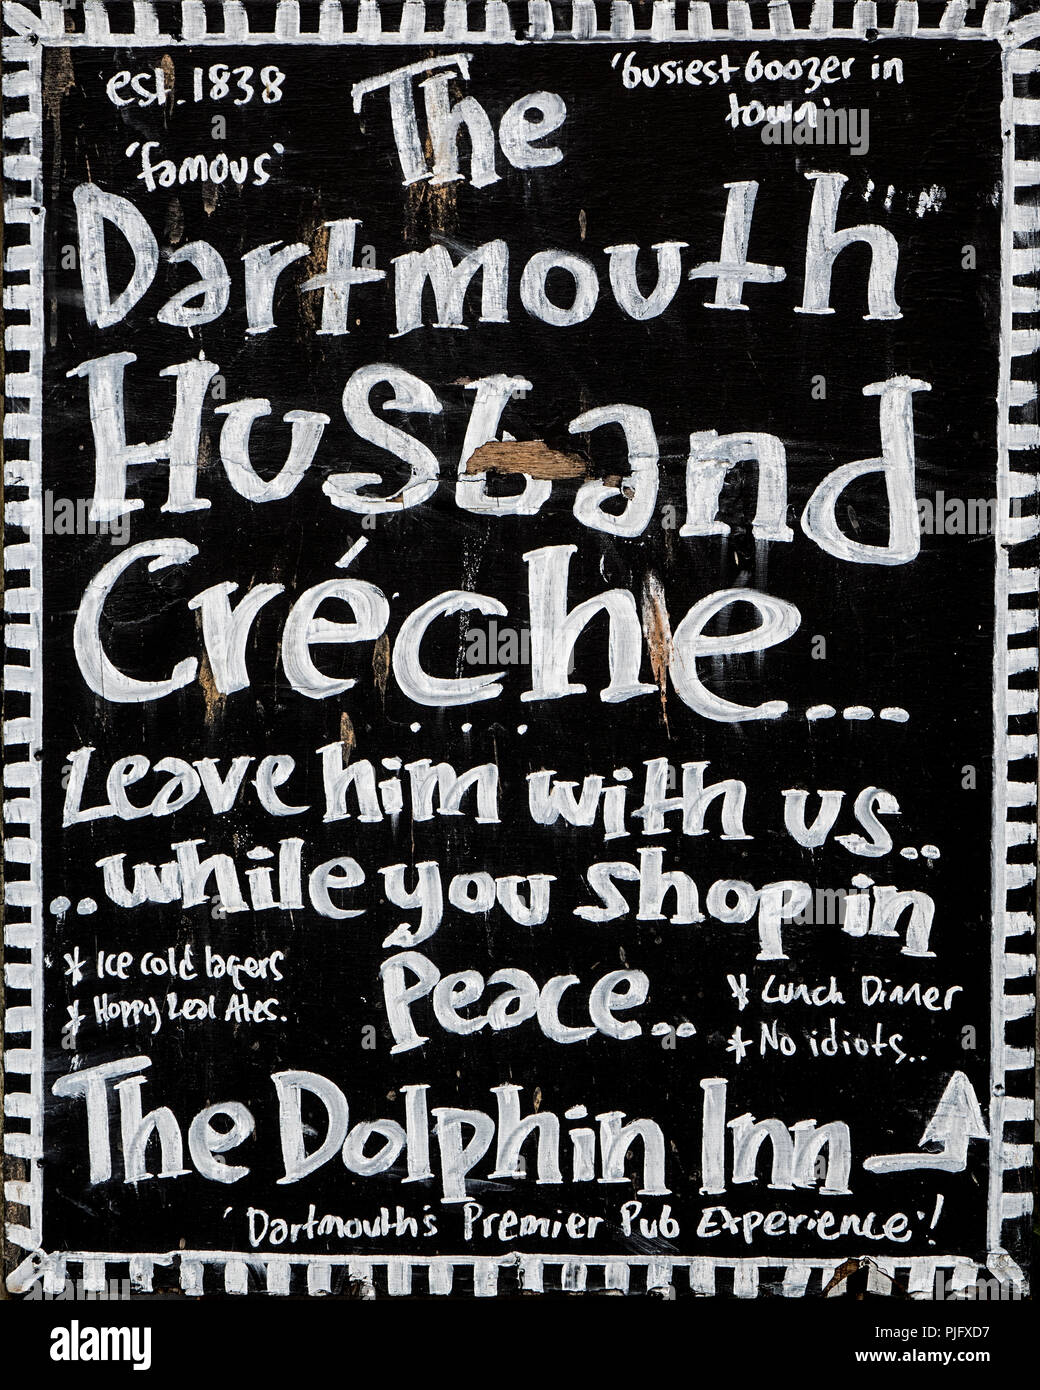 GB - DEVON: Sign for 'The Dolphin Inn' at Dartmouth Stock Photo